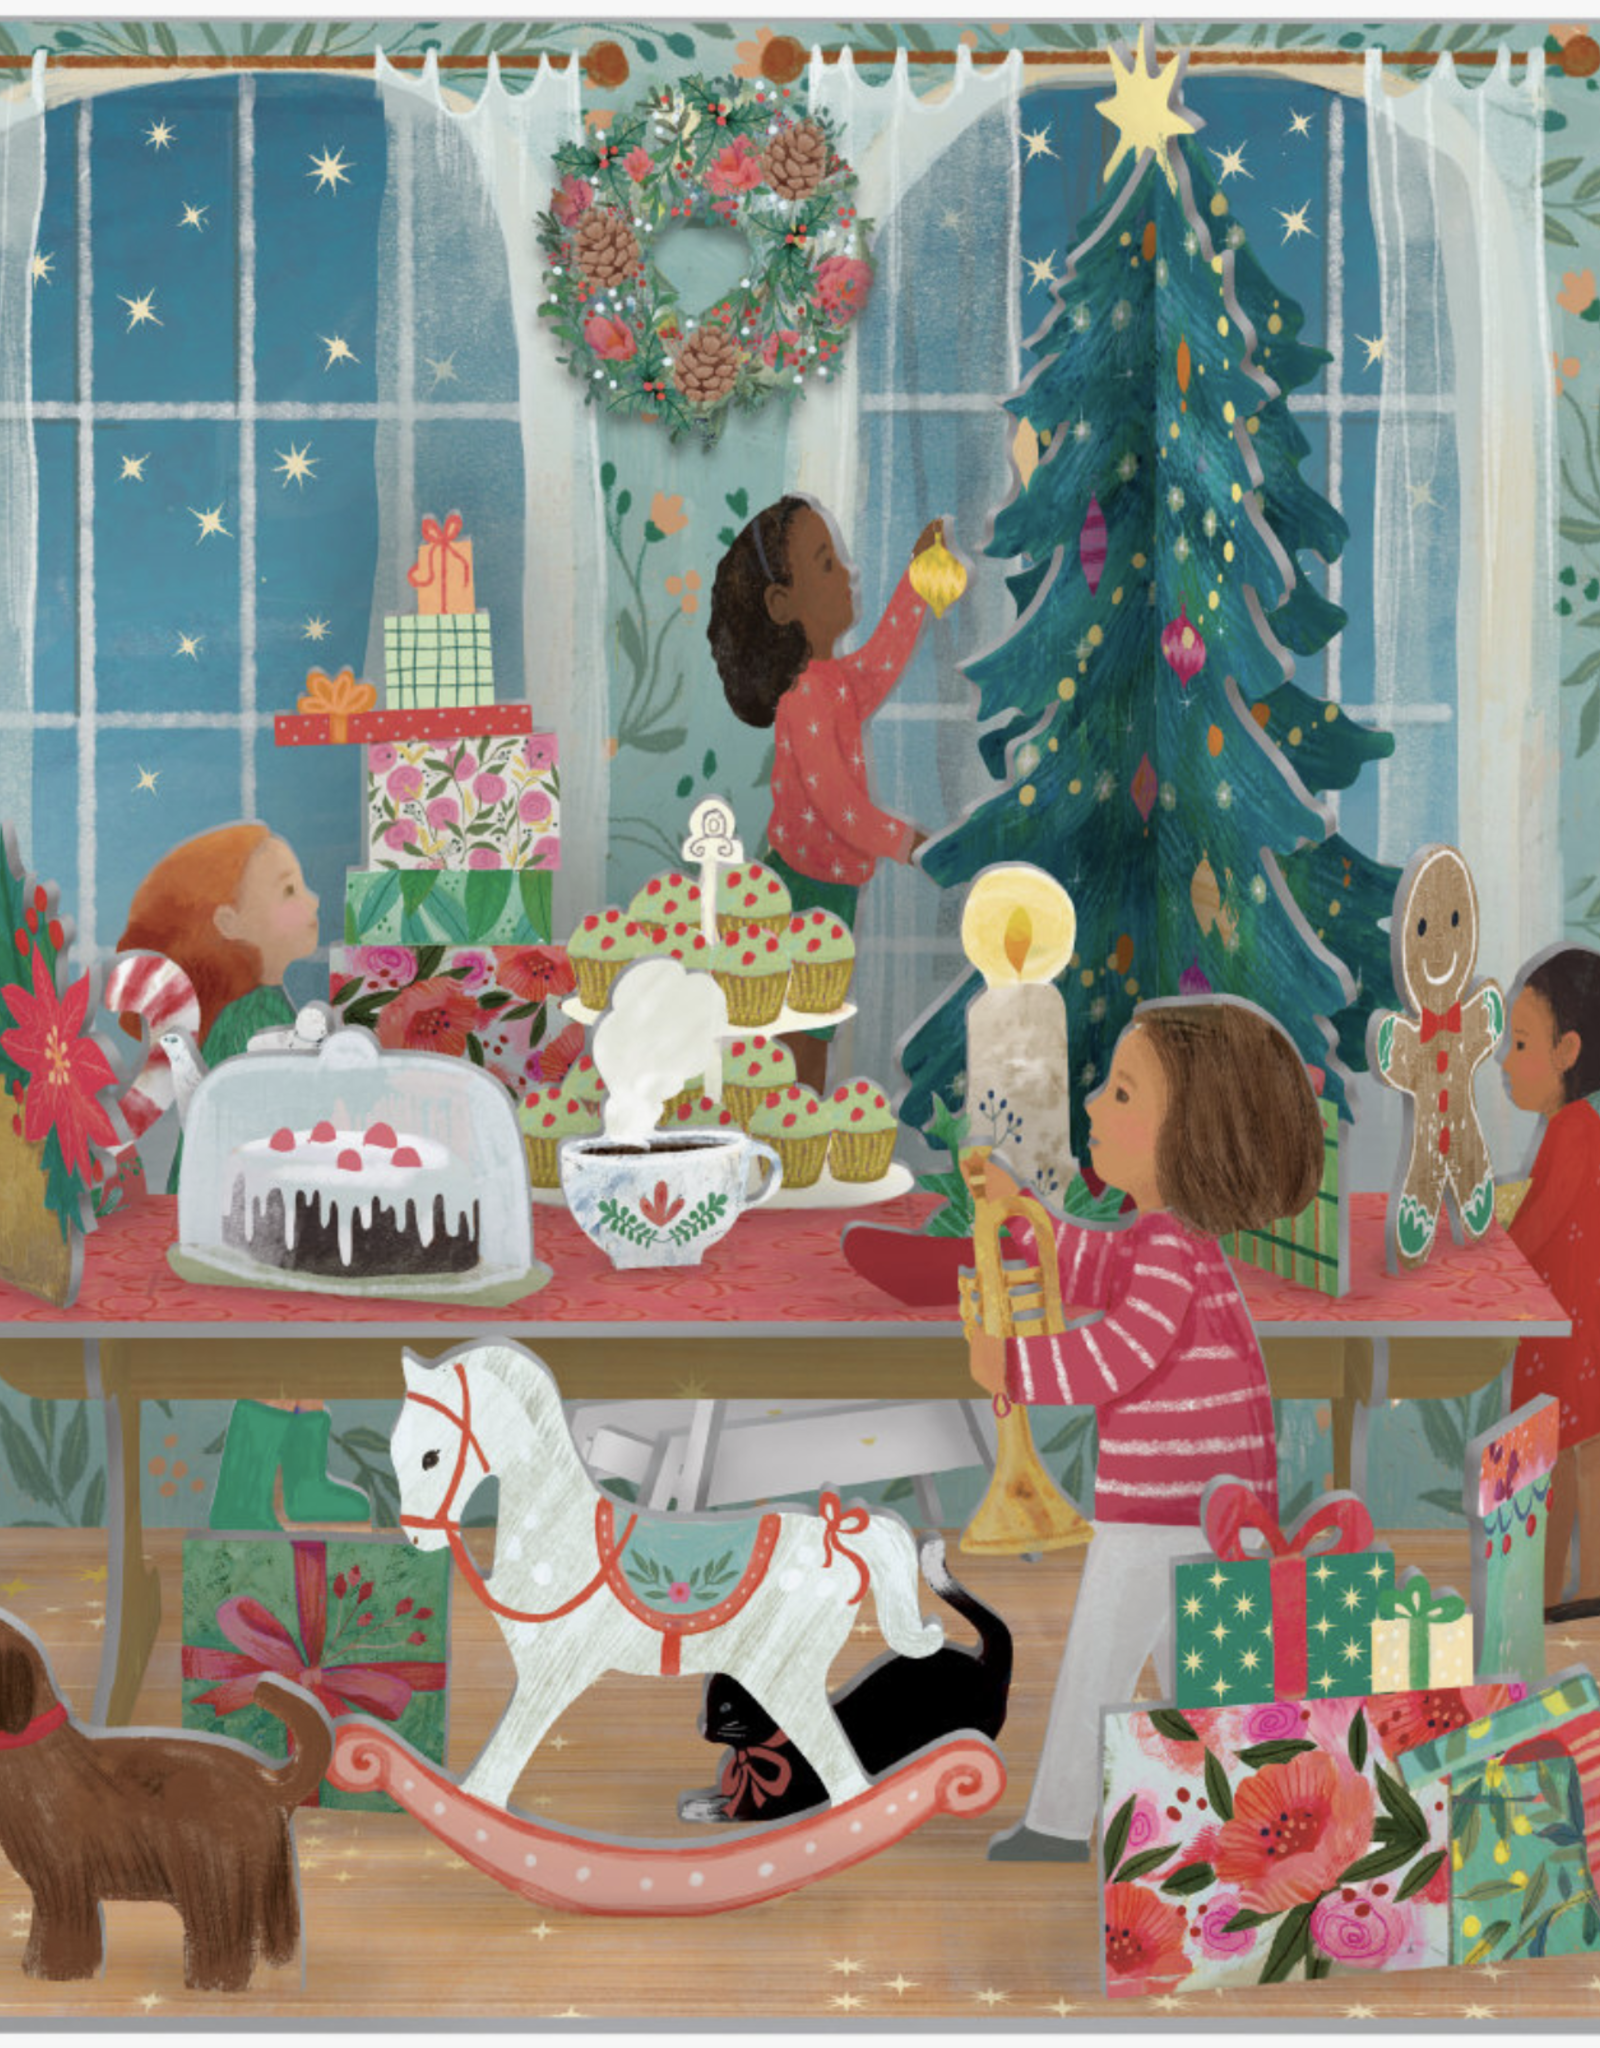 Roger La Borde A Christmas Party Advent Pop & Slot Calendar